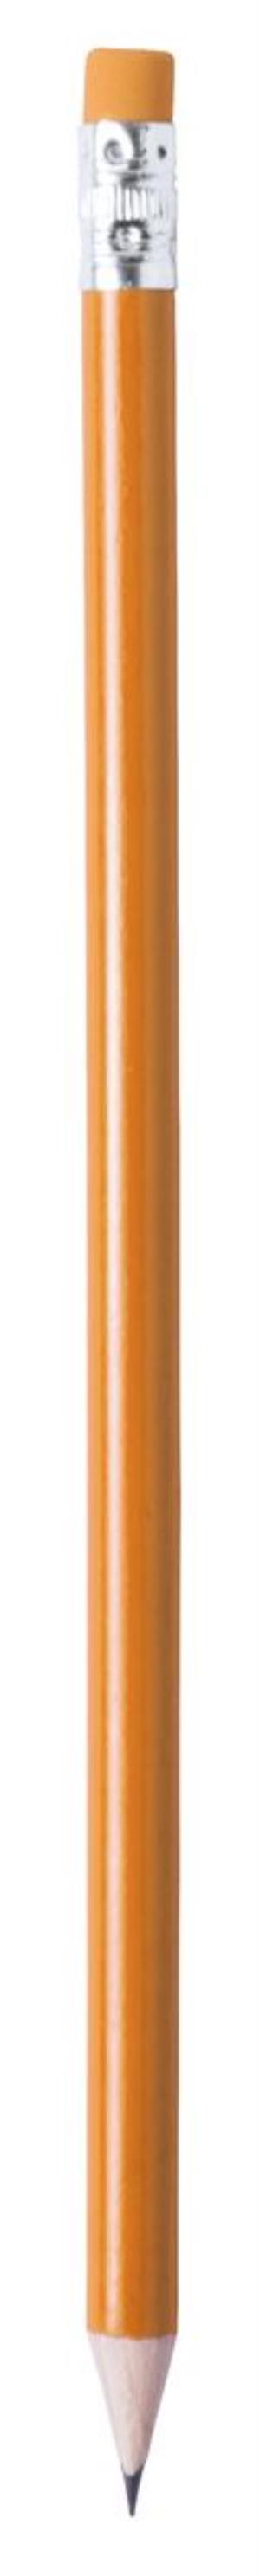 Drevená ceruzka Melart, oranžová